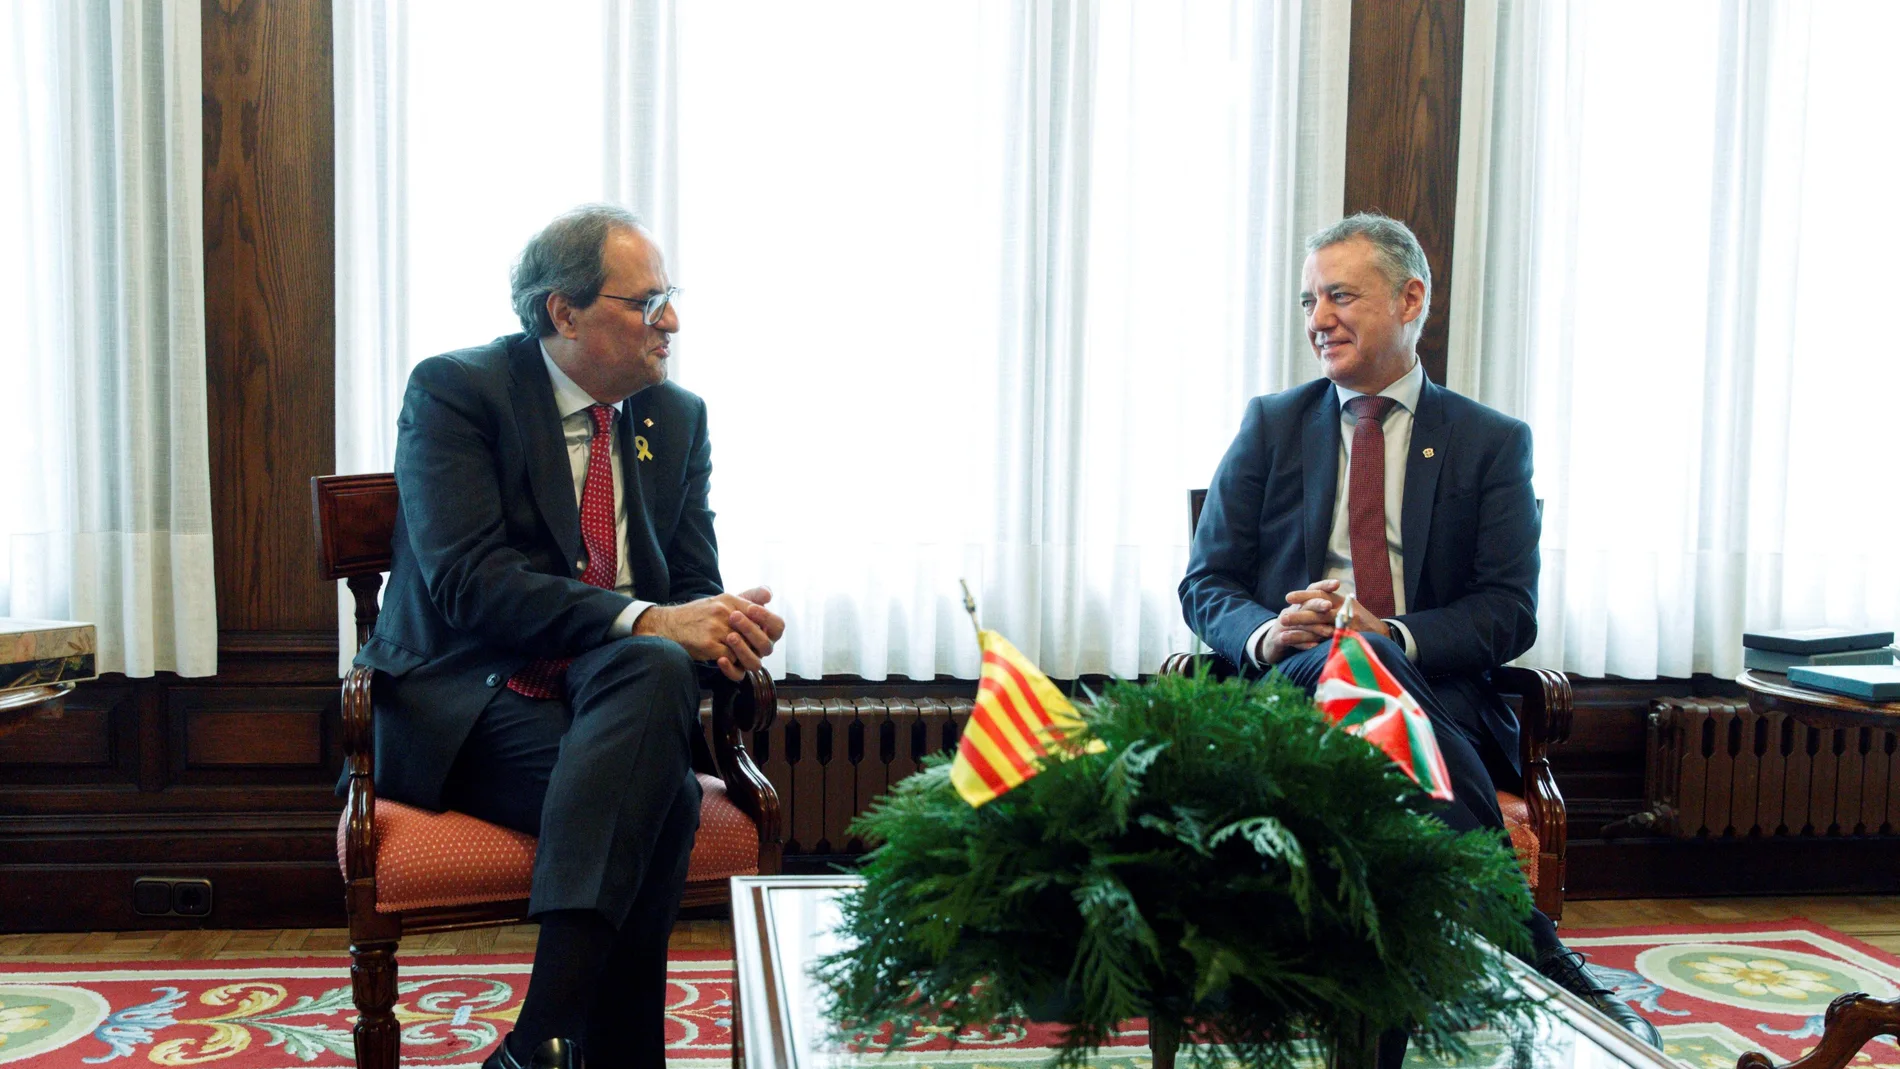 El presidente de la Generalitat de Cataluña, Quim Torra, con el lehendakari, Iñigo Urkullu